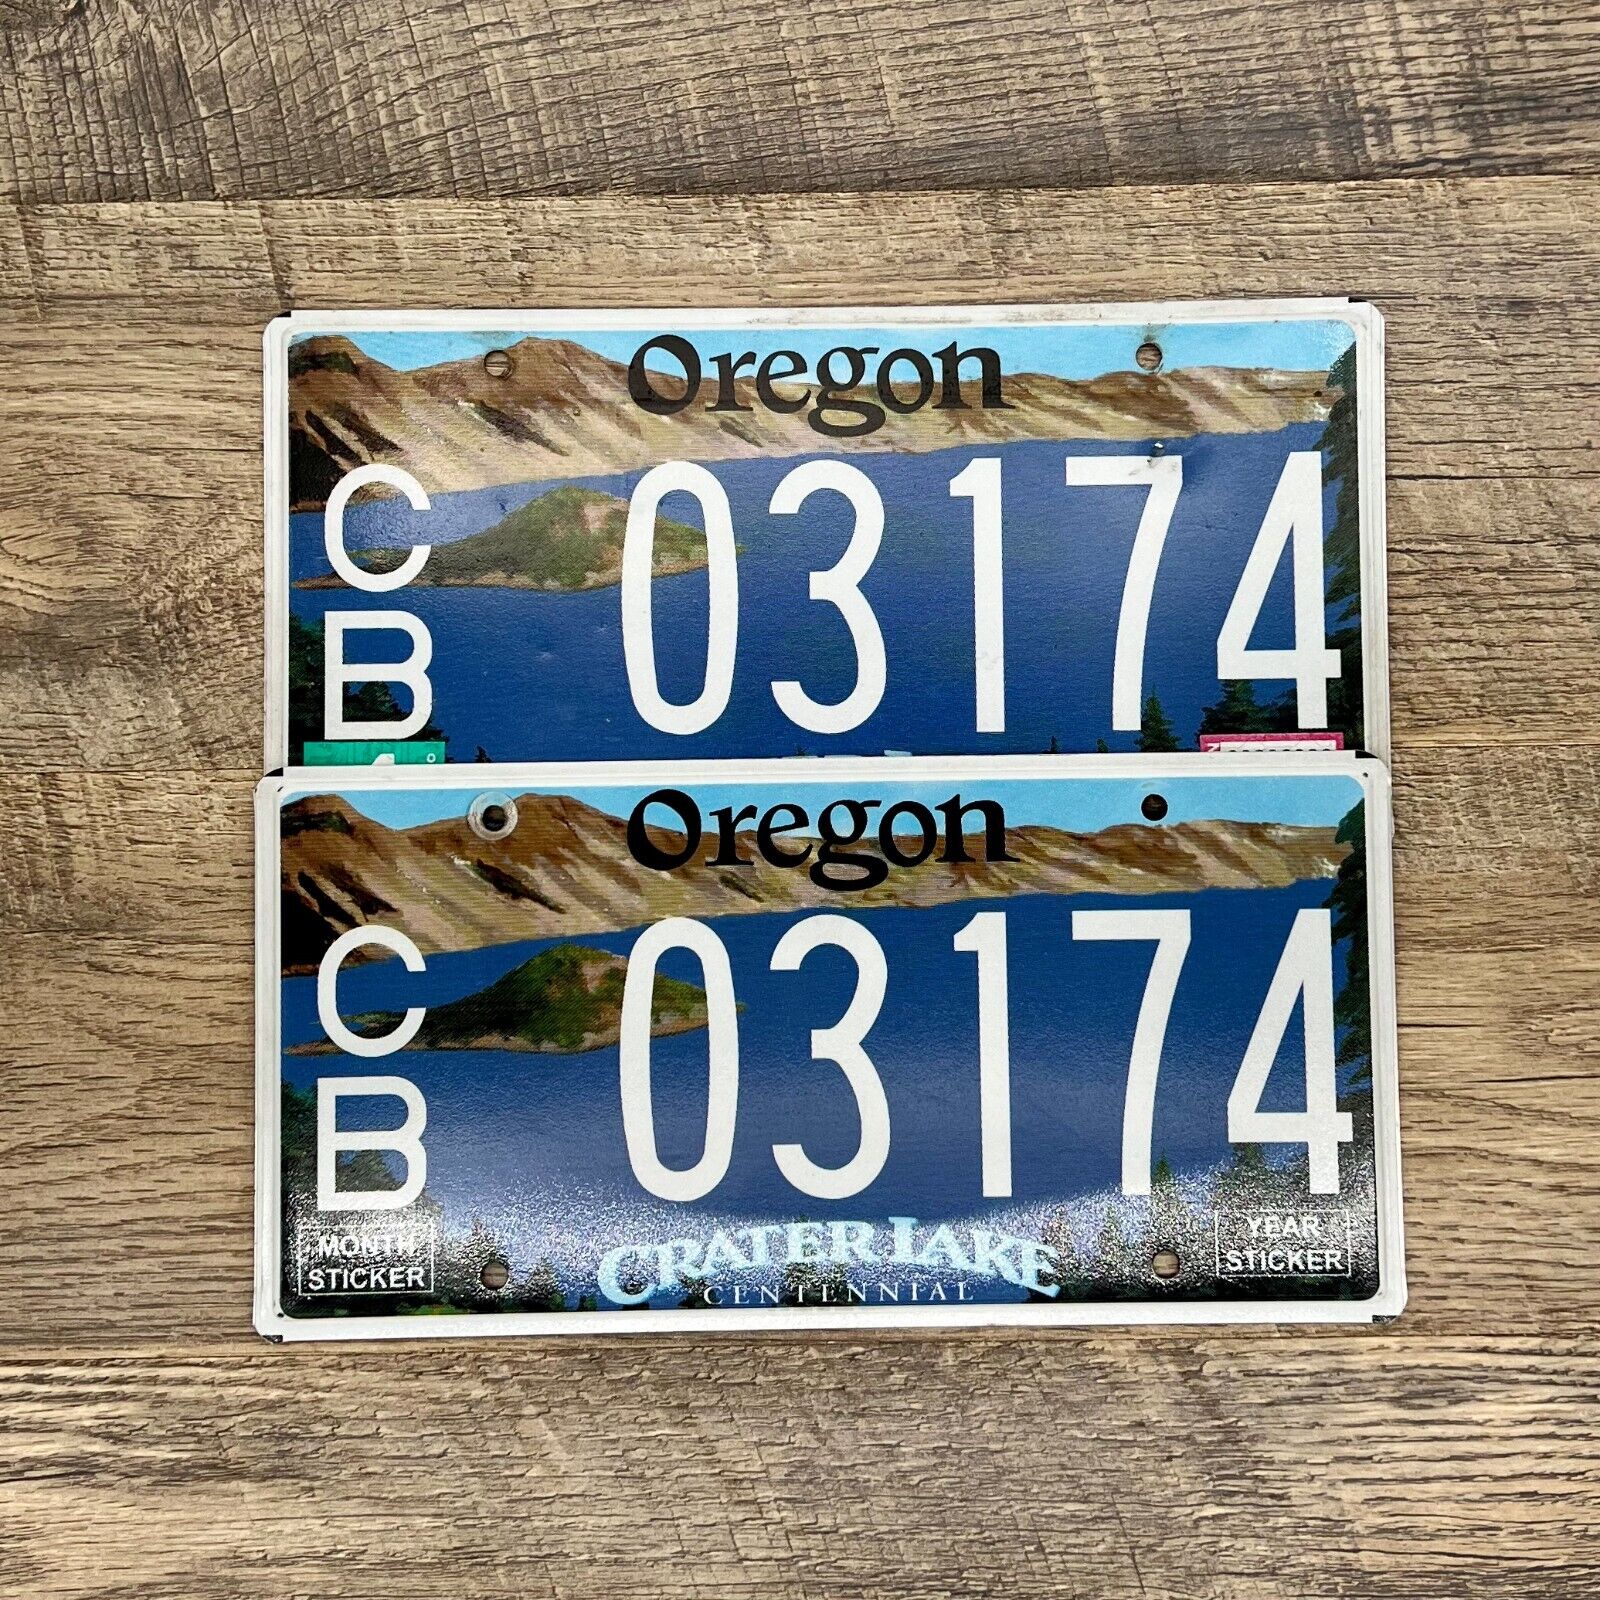 Original OREGON Crater Lake 2010 License Plate Pair - CB-03174 - Great Condition